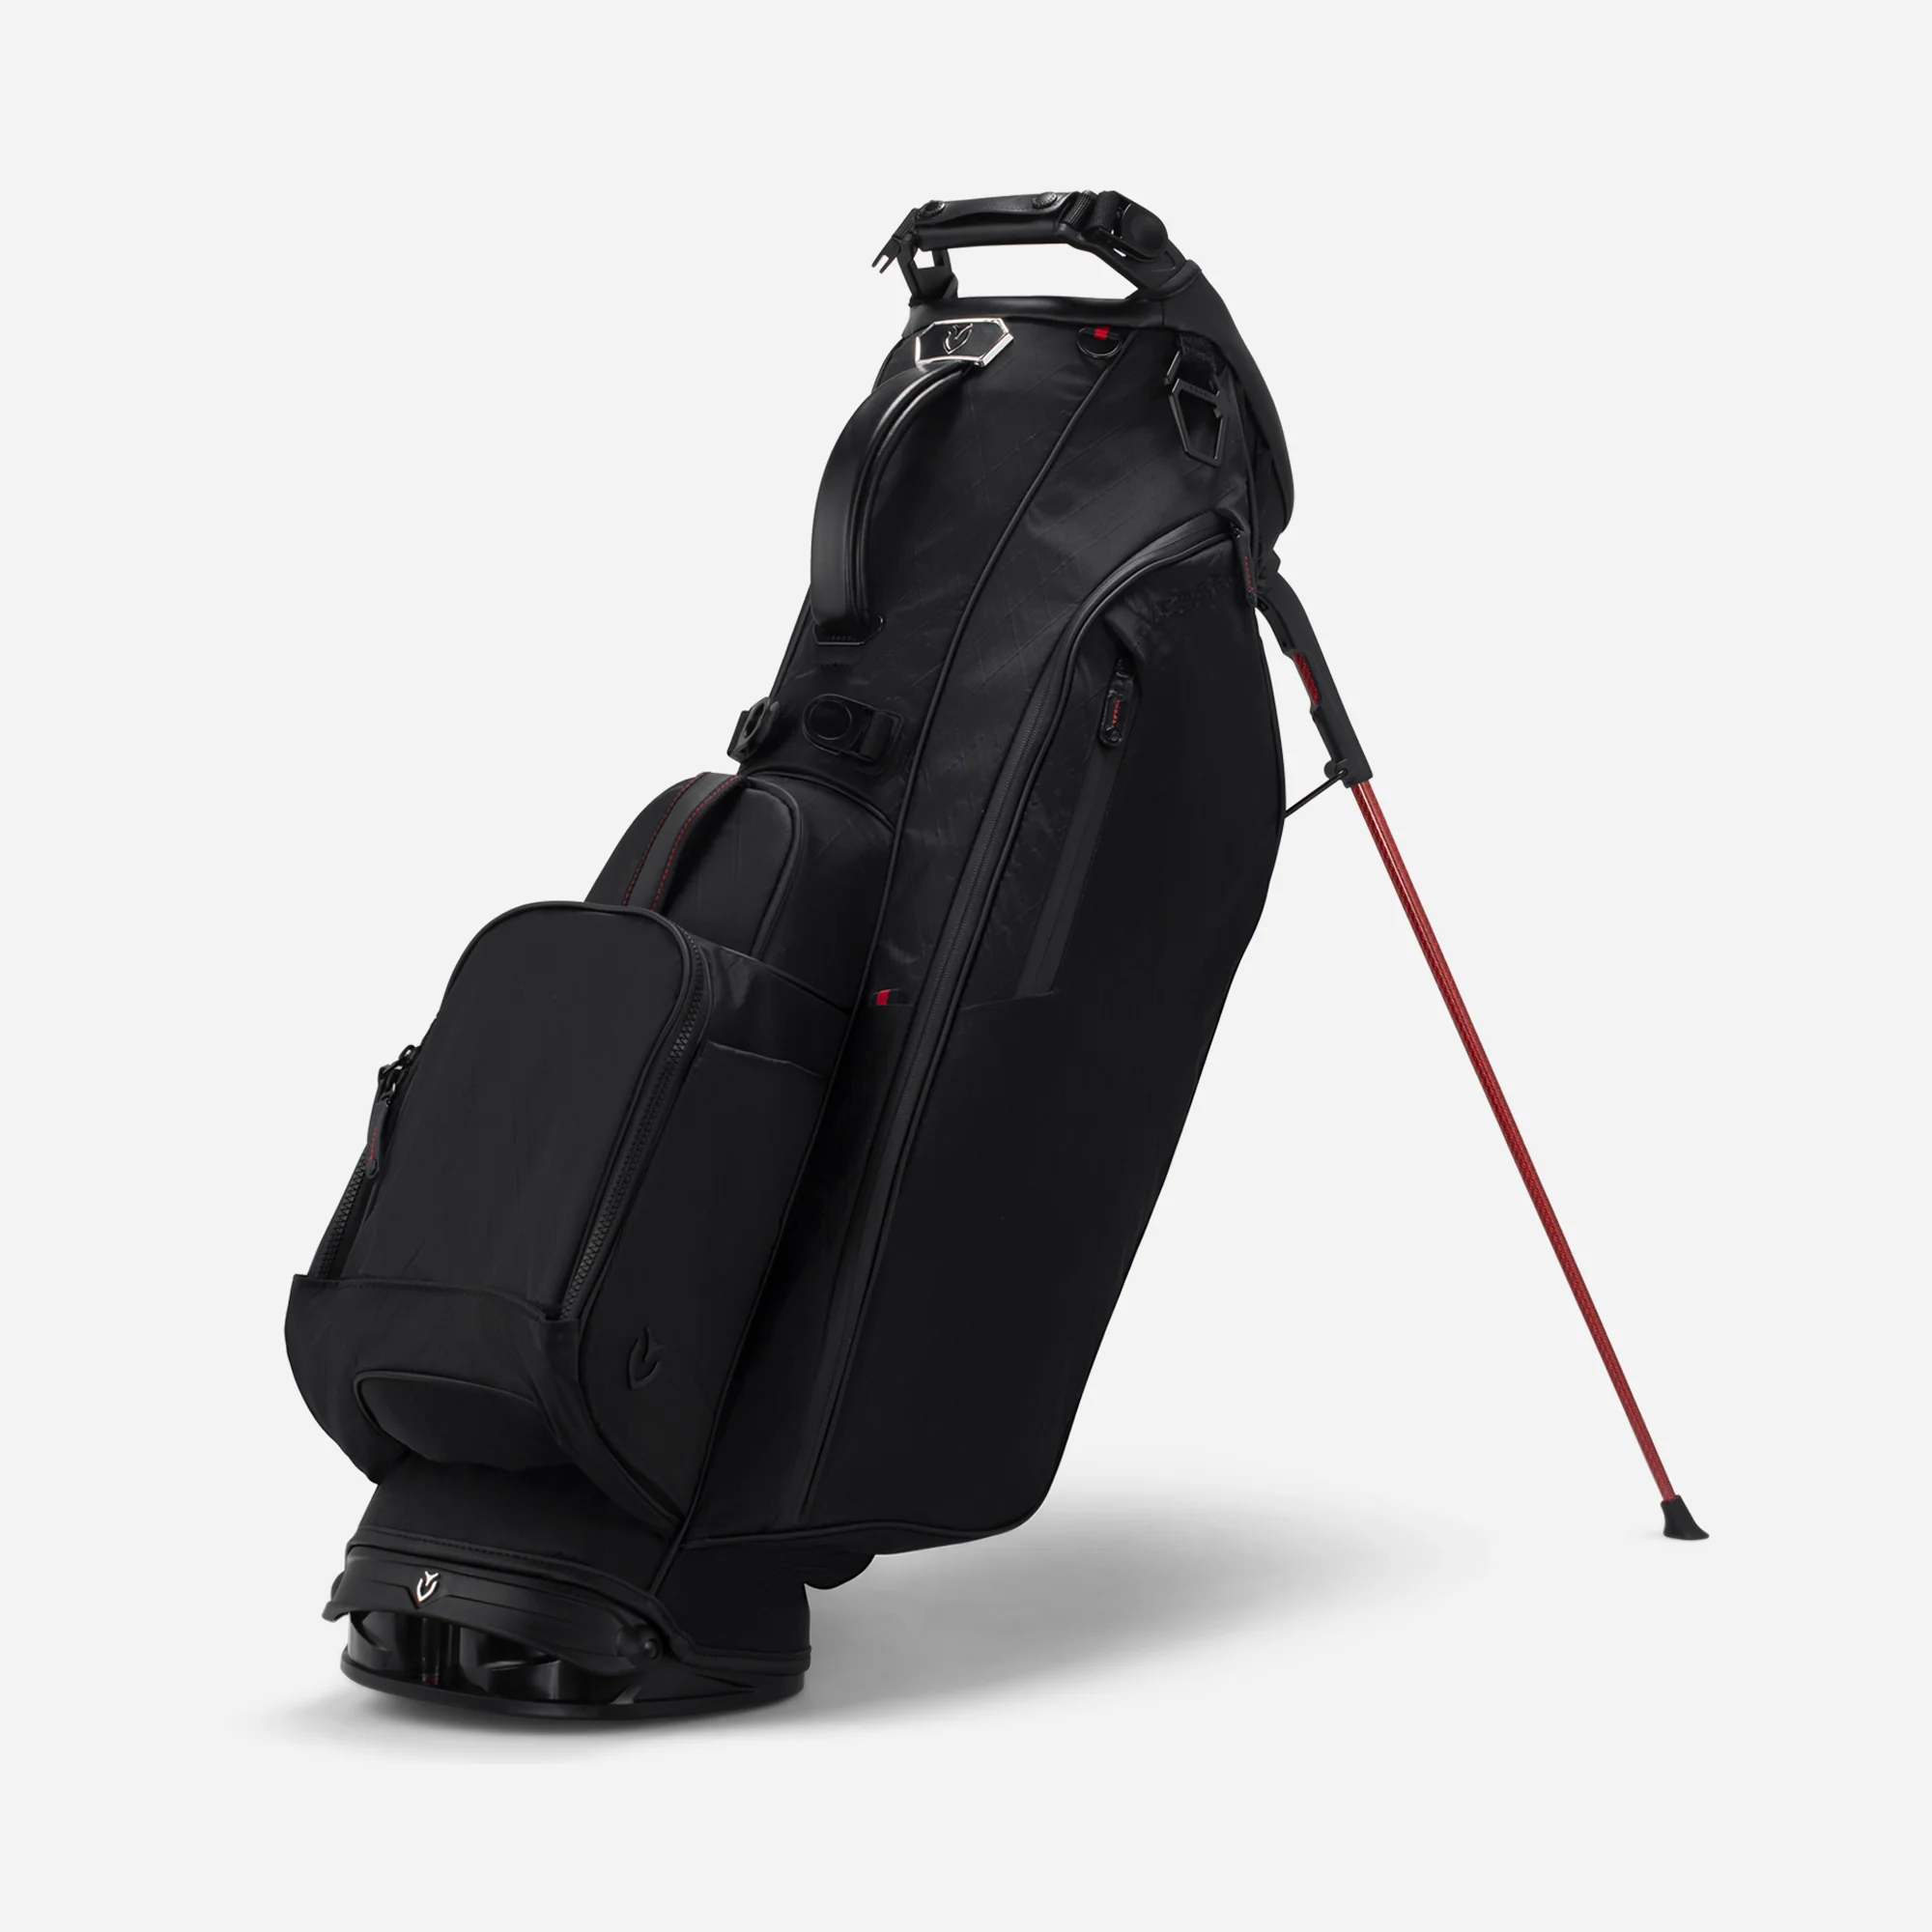 Vessel Player IV Pro DXR Stand | Lightweight Golf Stand Bag